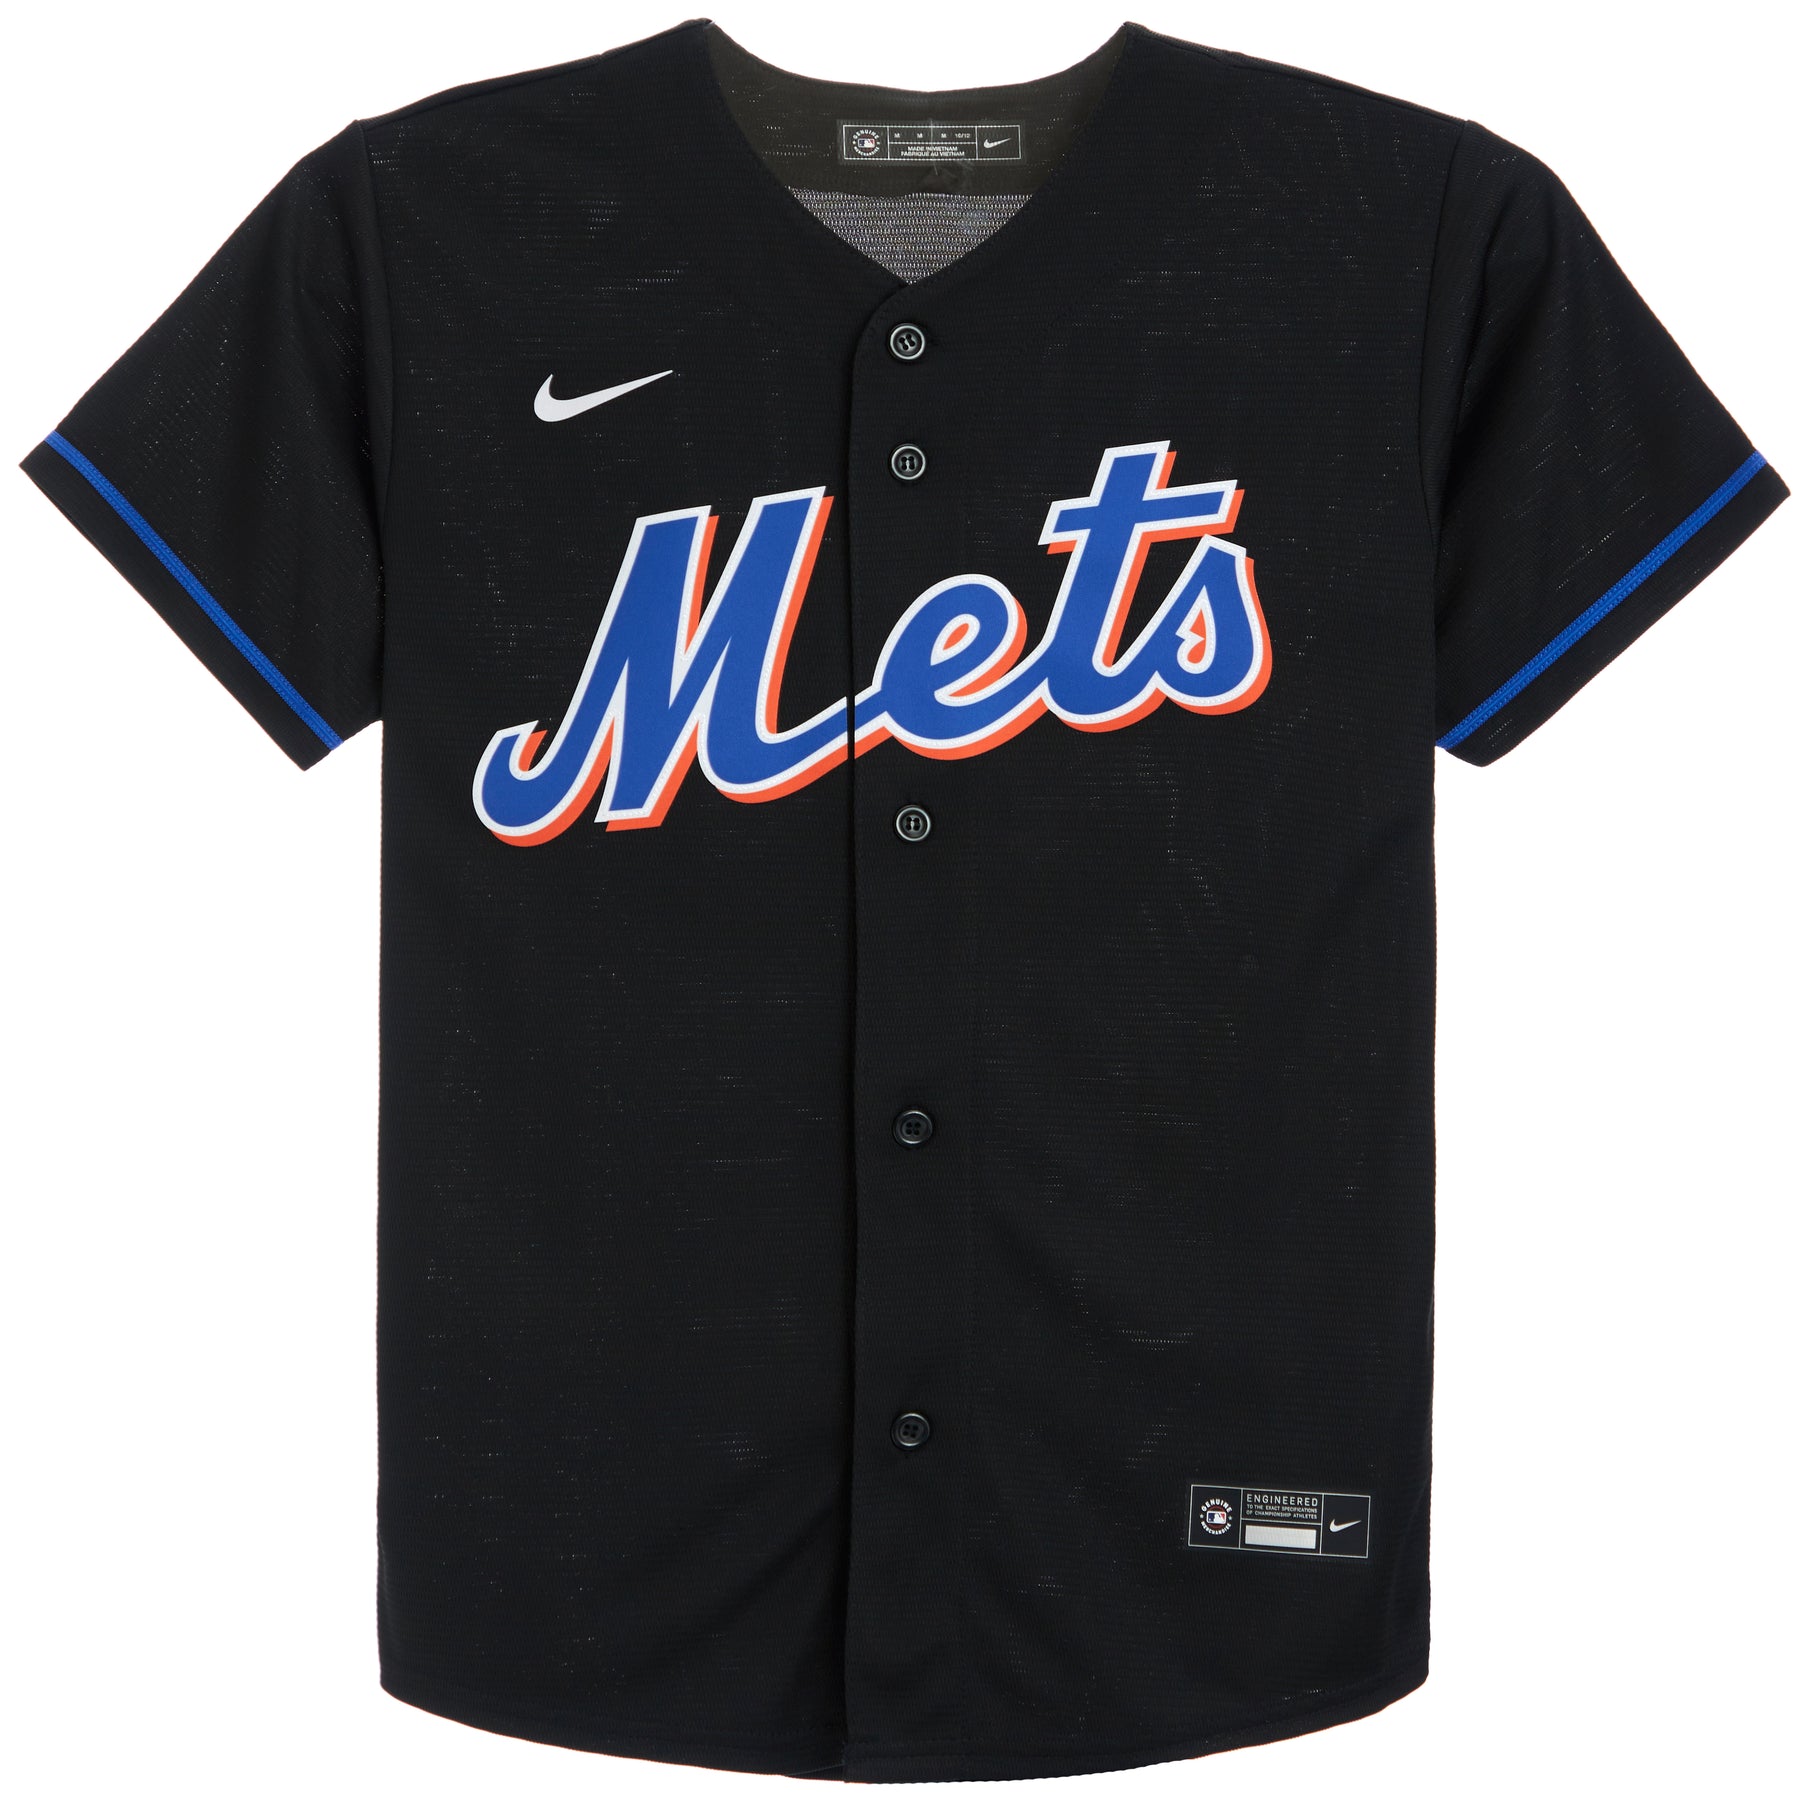 Nimmo Mets Alternate Black Jersey